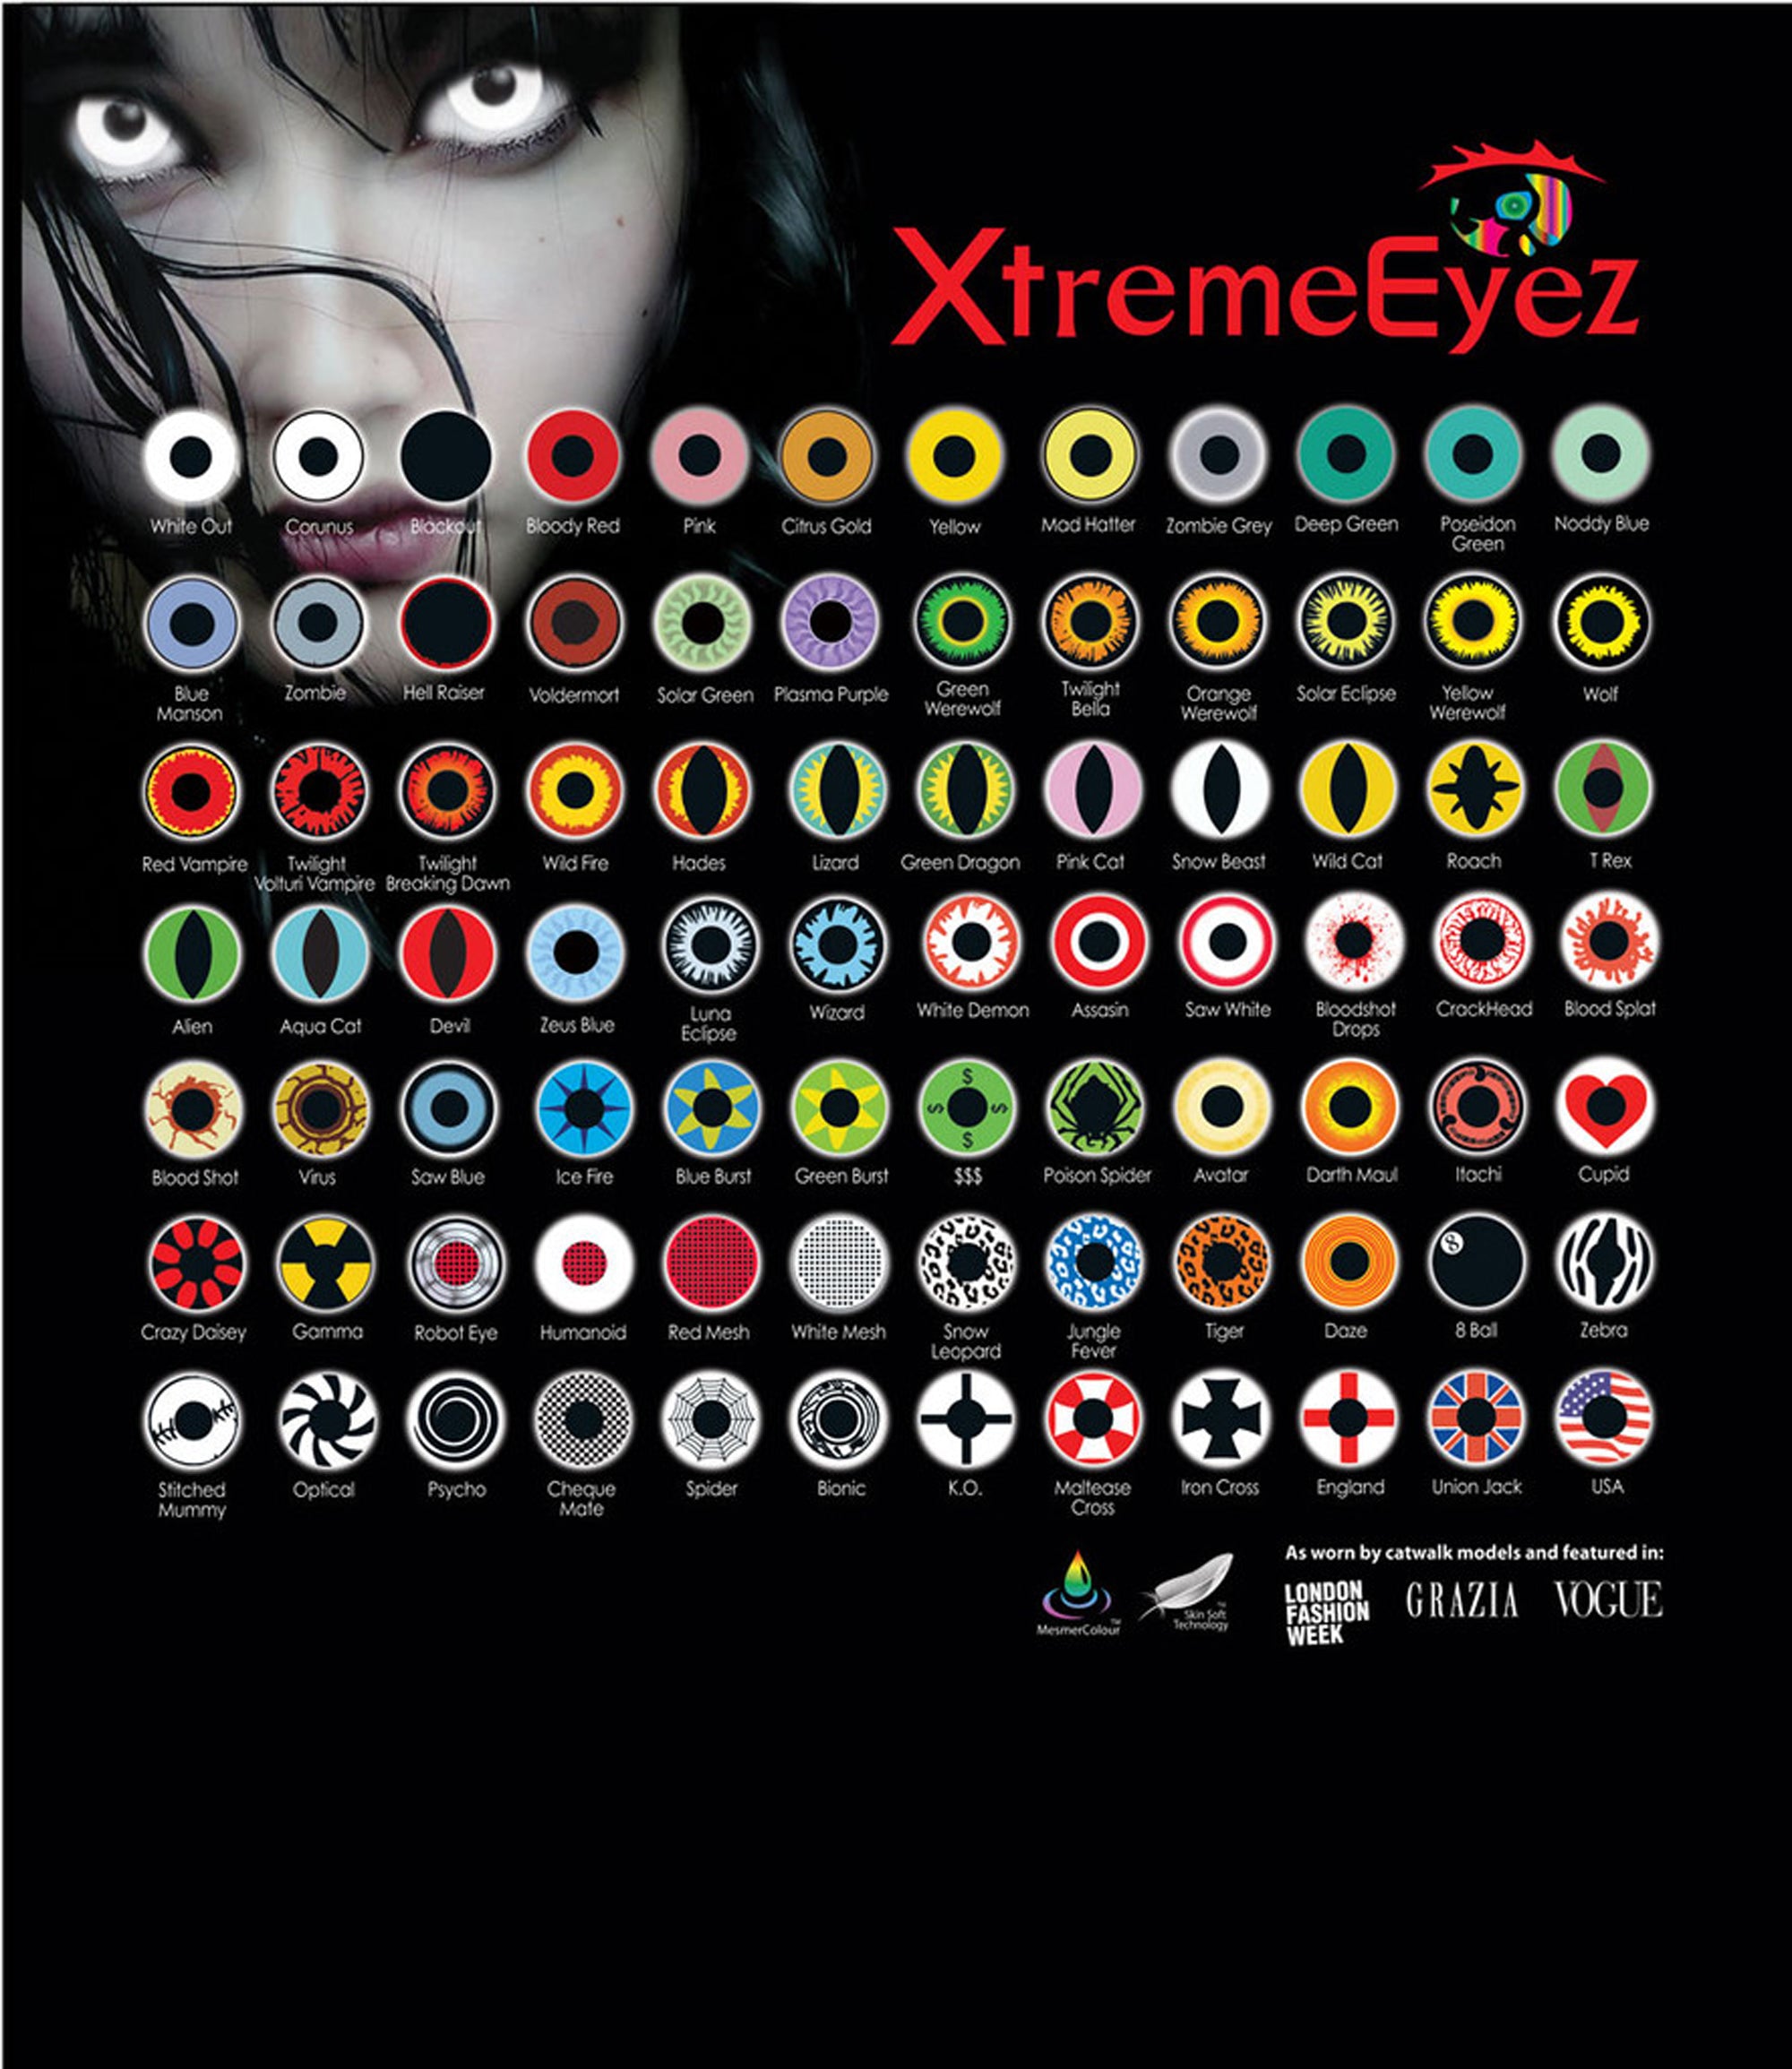 Xtreme eyes contact lenses